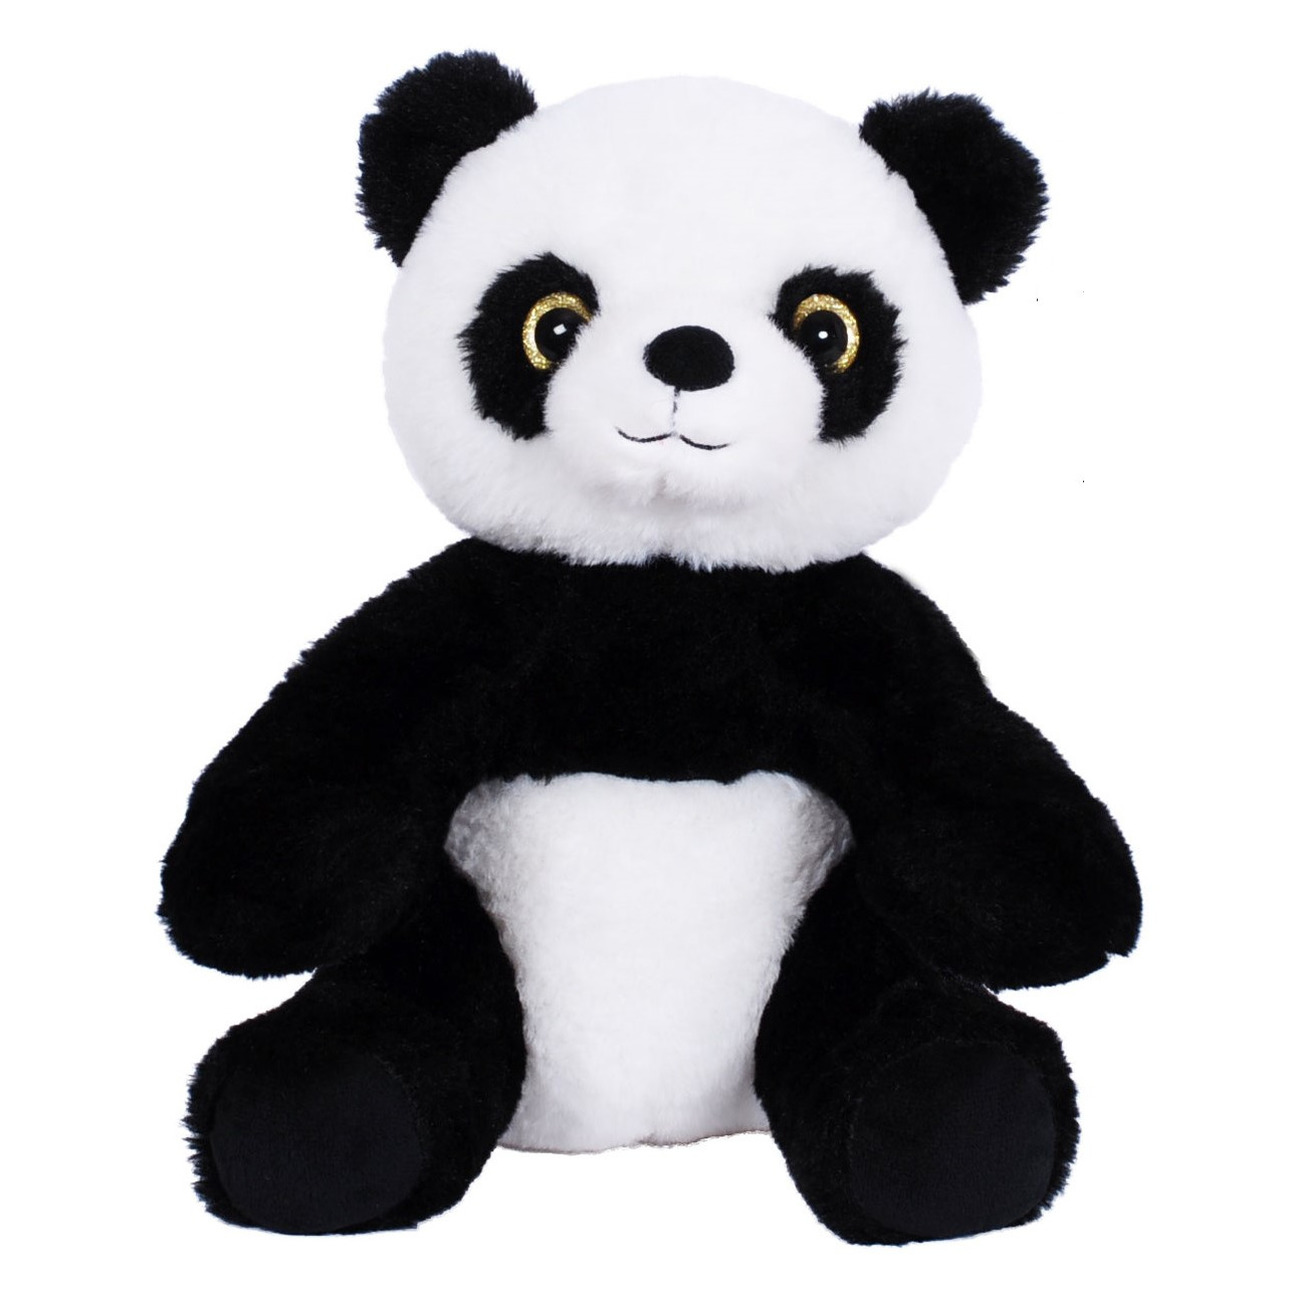 Sandy Pluche speelgoed knuffeldier Panda beer van 25 cm -